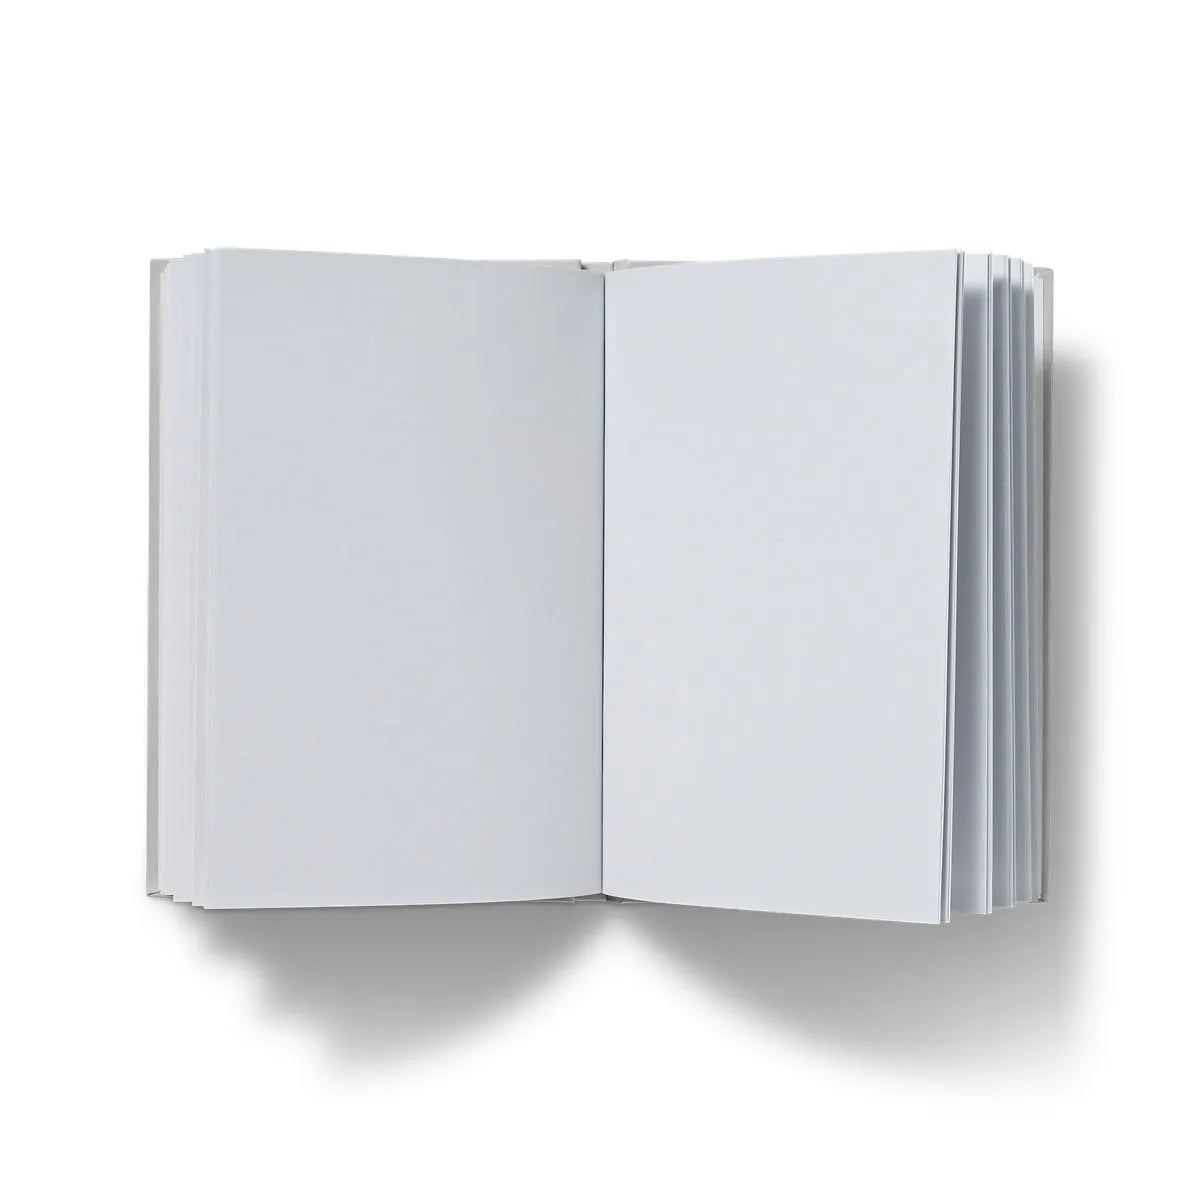 Colombes Et Lis By Maurice Pillard Verneuil Hardback Journal - Notebooks & Notepads - Aesthetic Art